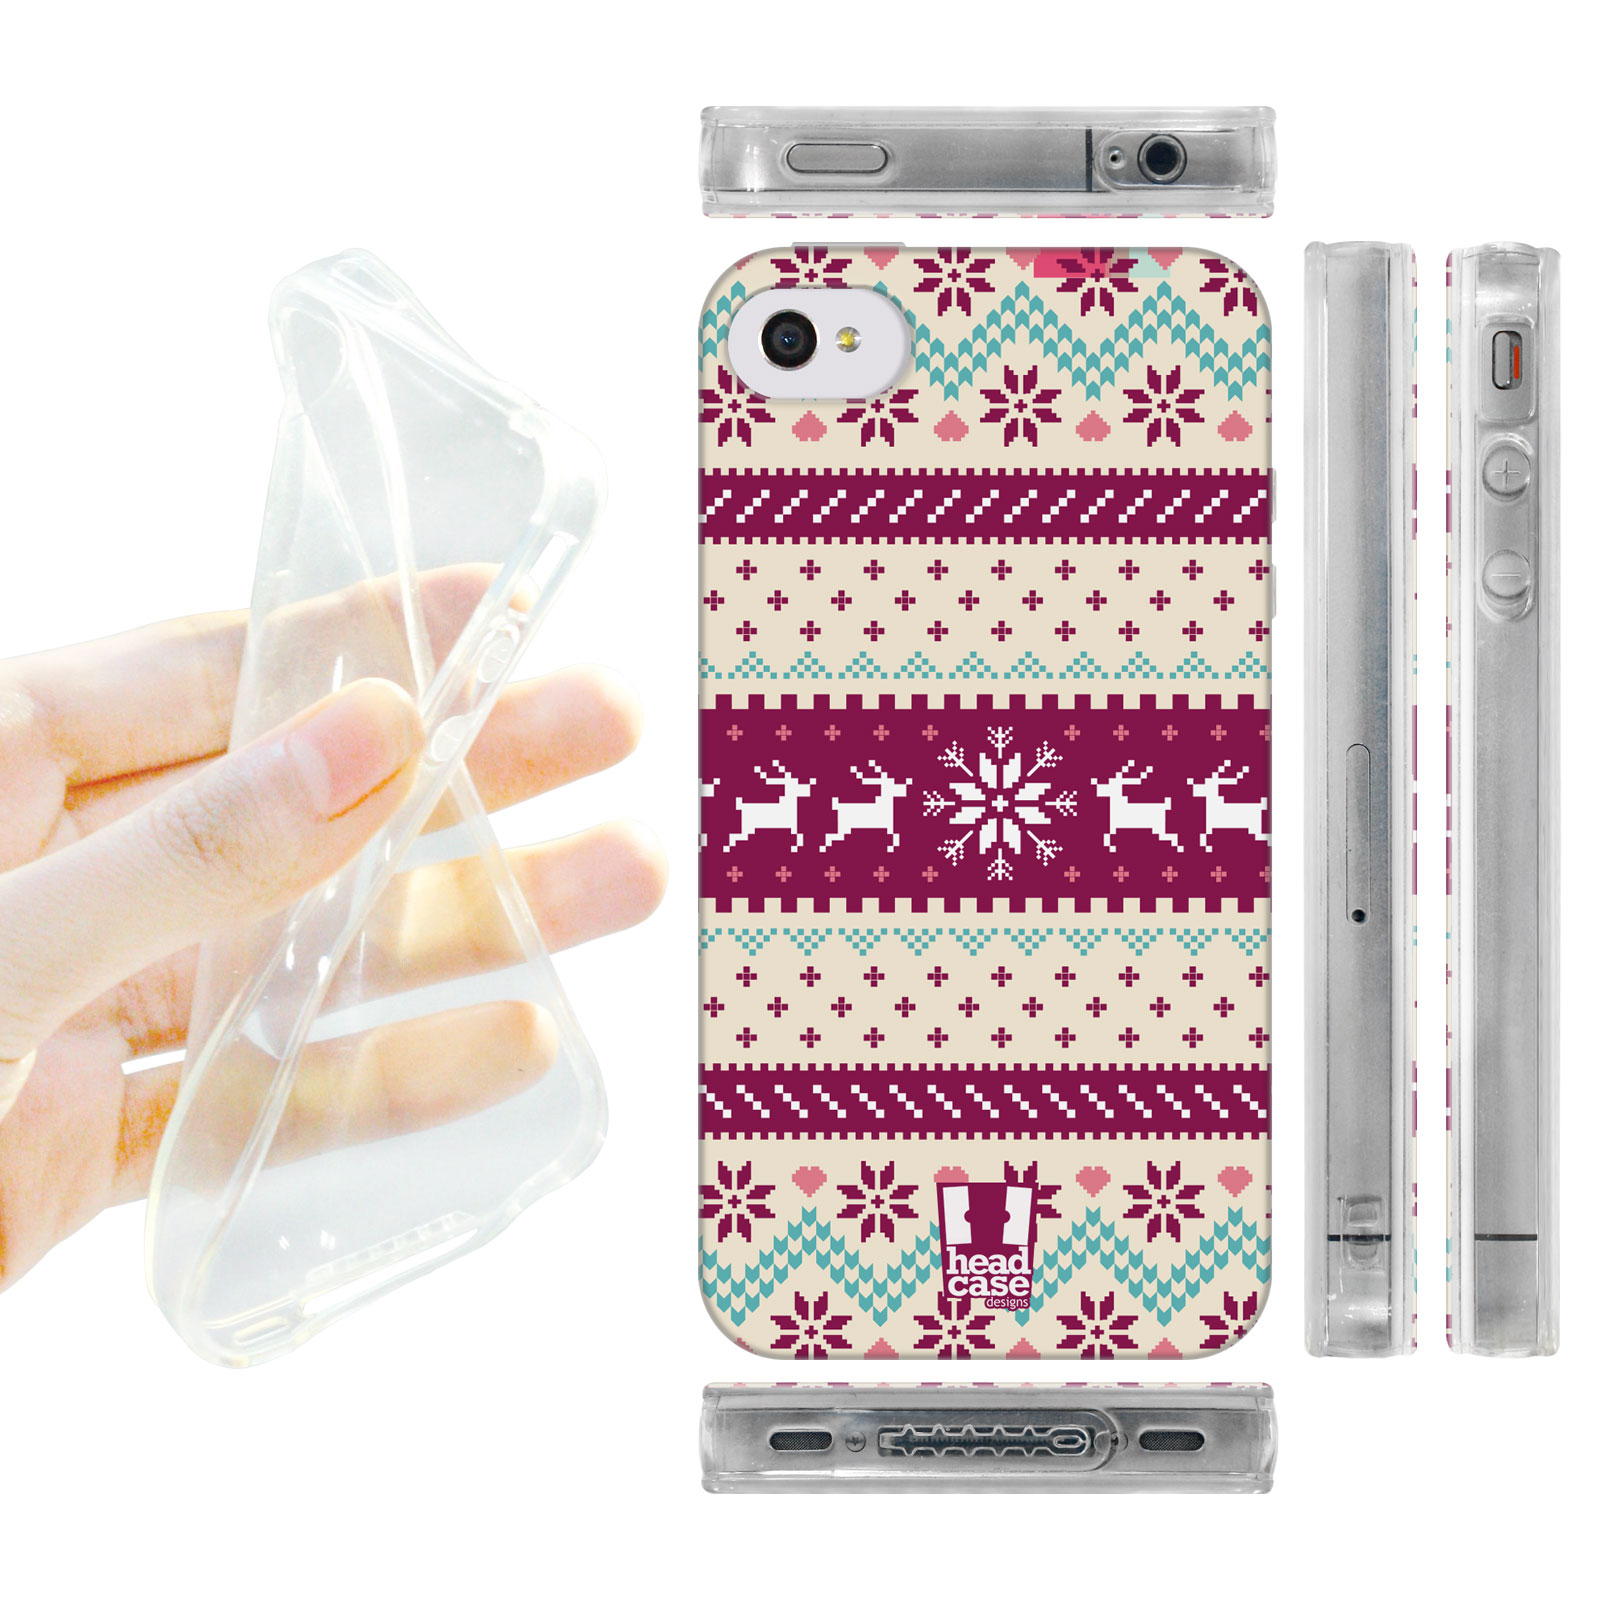 HEAD CASE silikonový obal na mobil Iphone 4/4S Vzor zima fialová a bílá vánoce